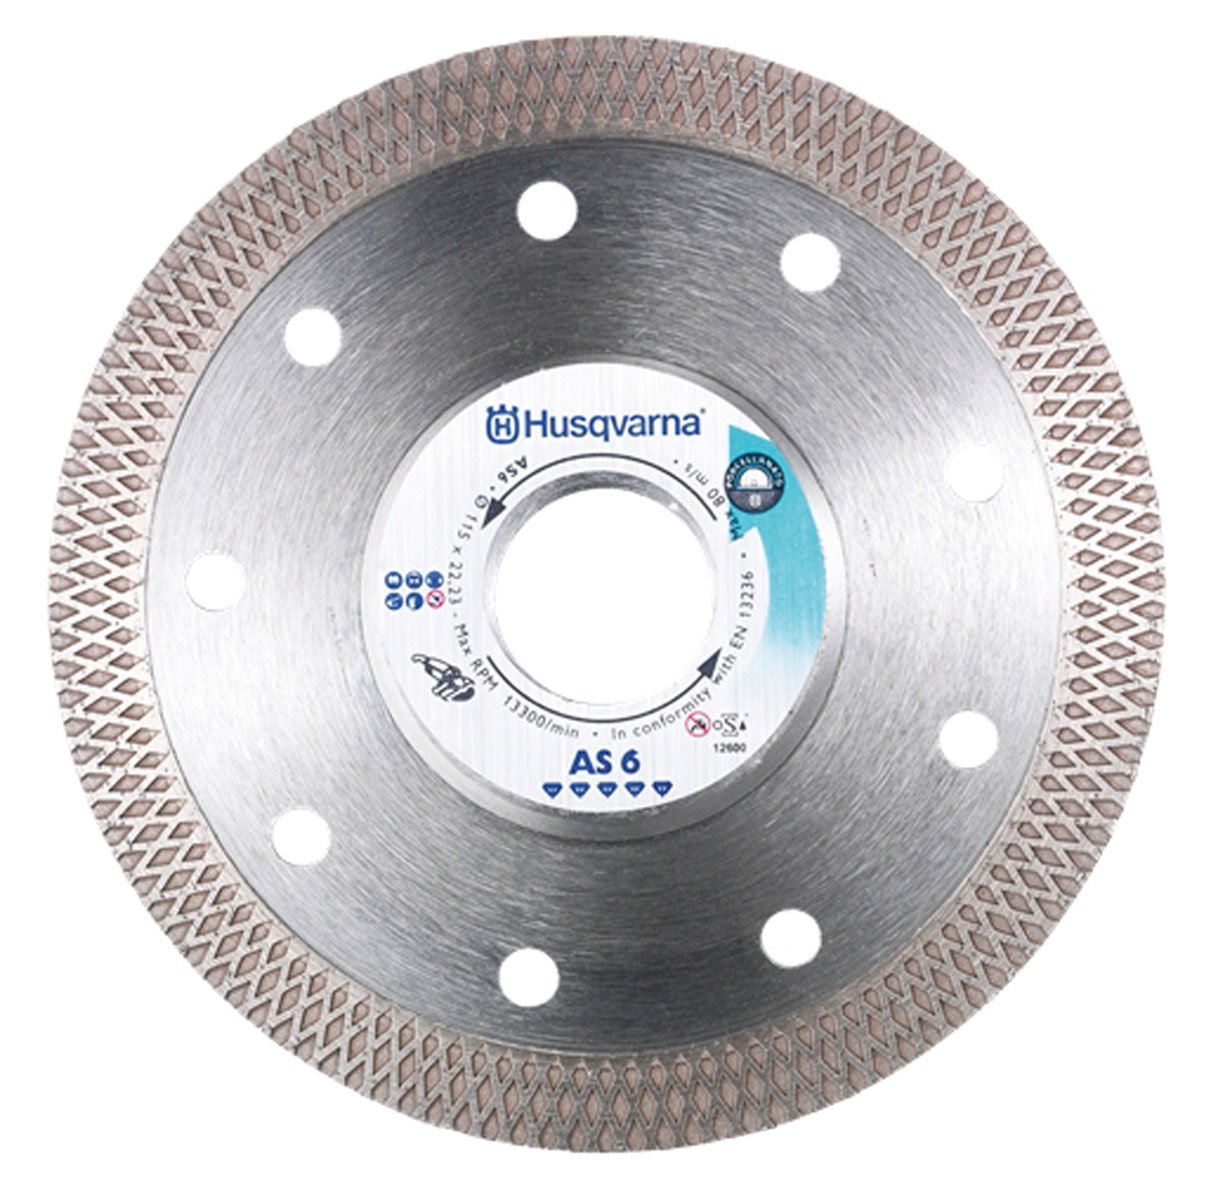 Dimopanas - HUSQVARNA DIAMOND DISC Φ115 AS6 (PLACK PORCEL) (574268601)